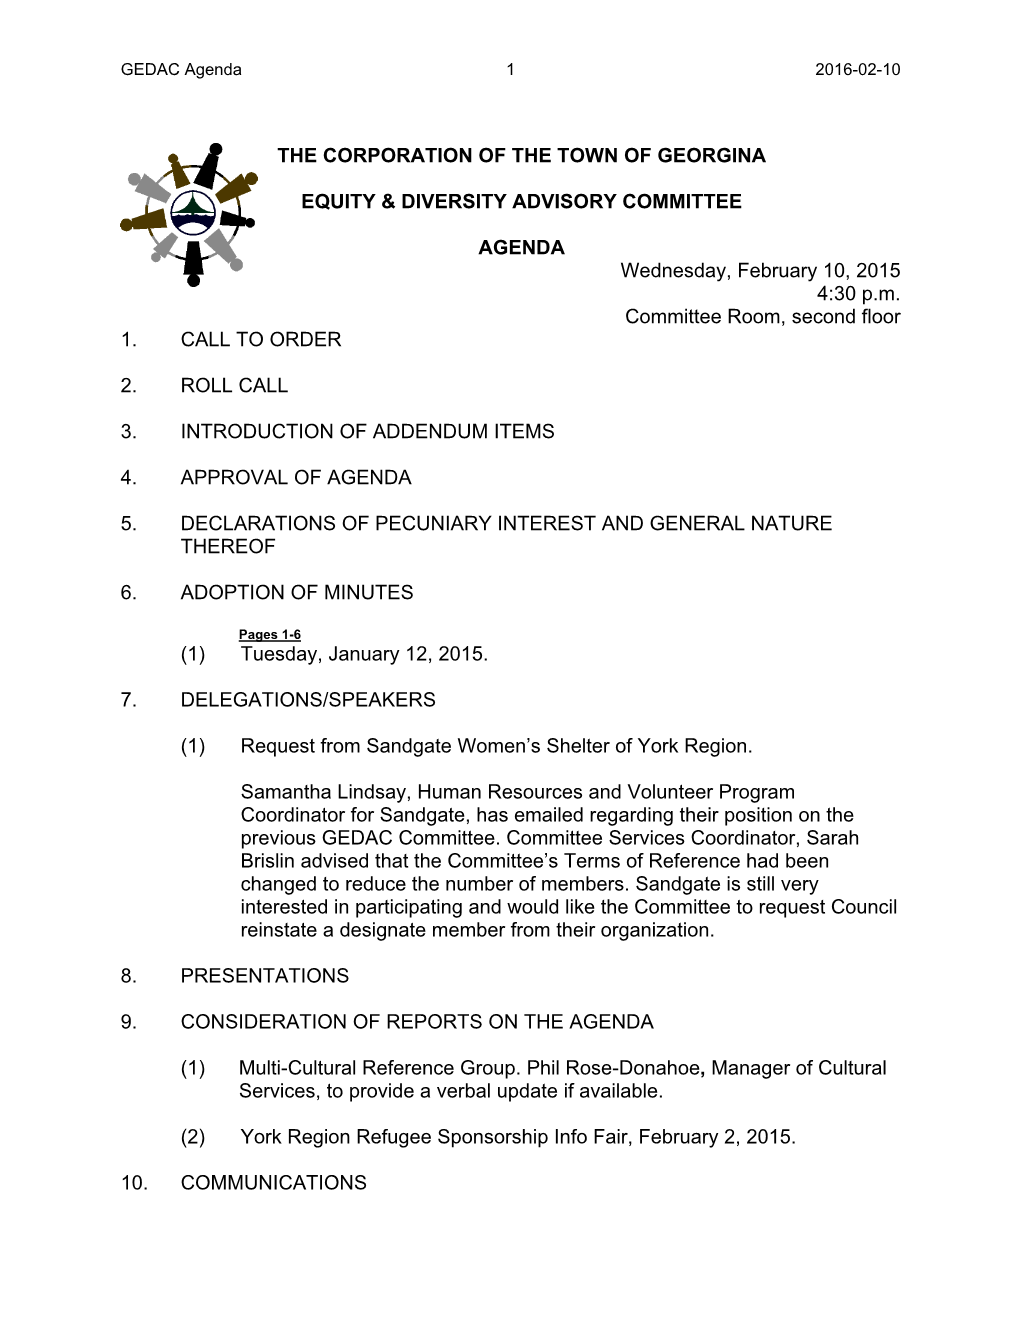 THE CORPORATION of the TOWN of GEORGINA EQUITY & DIVERSITY ADVISORY COMMITTEE AGENDA Wednesday, February 10, 2015 4:30 P.M